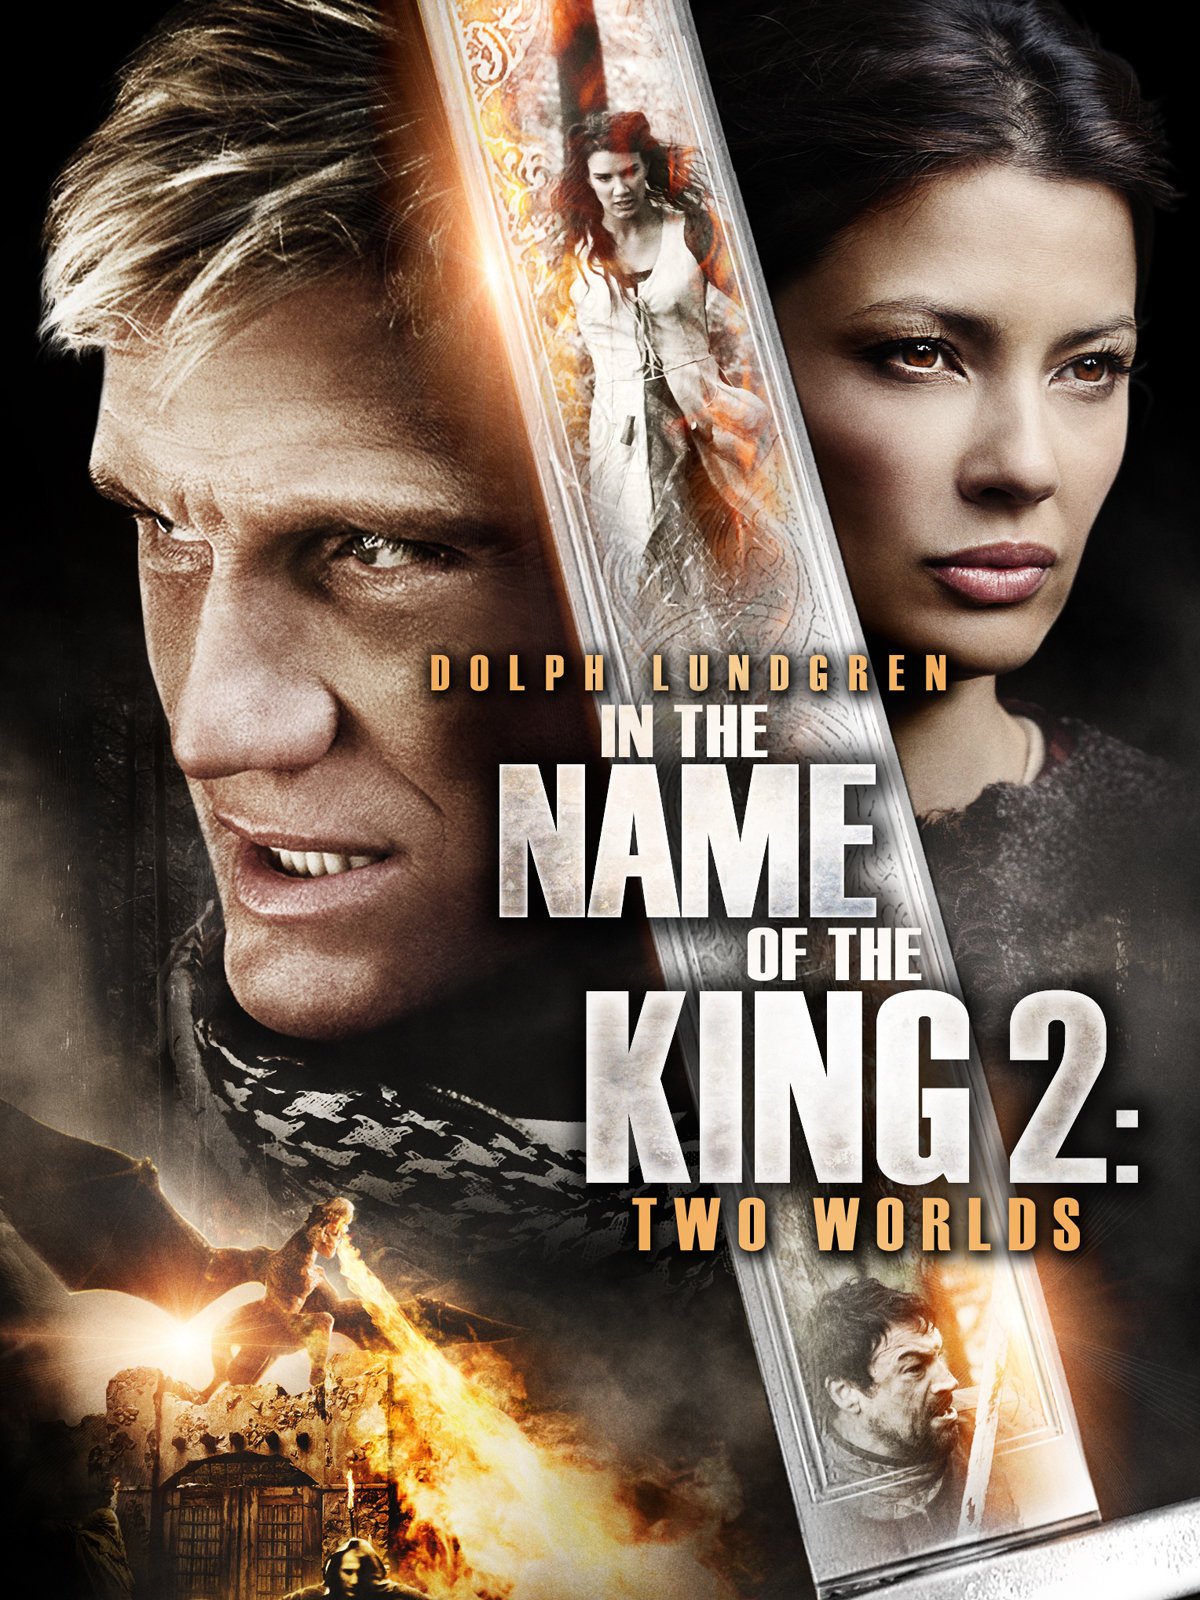 In the Name of the King 2 Two Worlds (2011) ศึกนักรบกองพันปีศาจ 2 - ดูหนังออนไลน